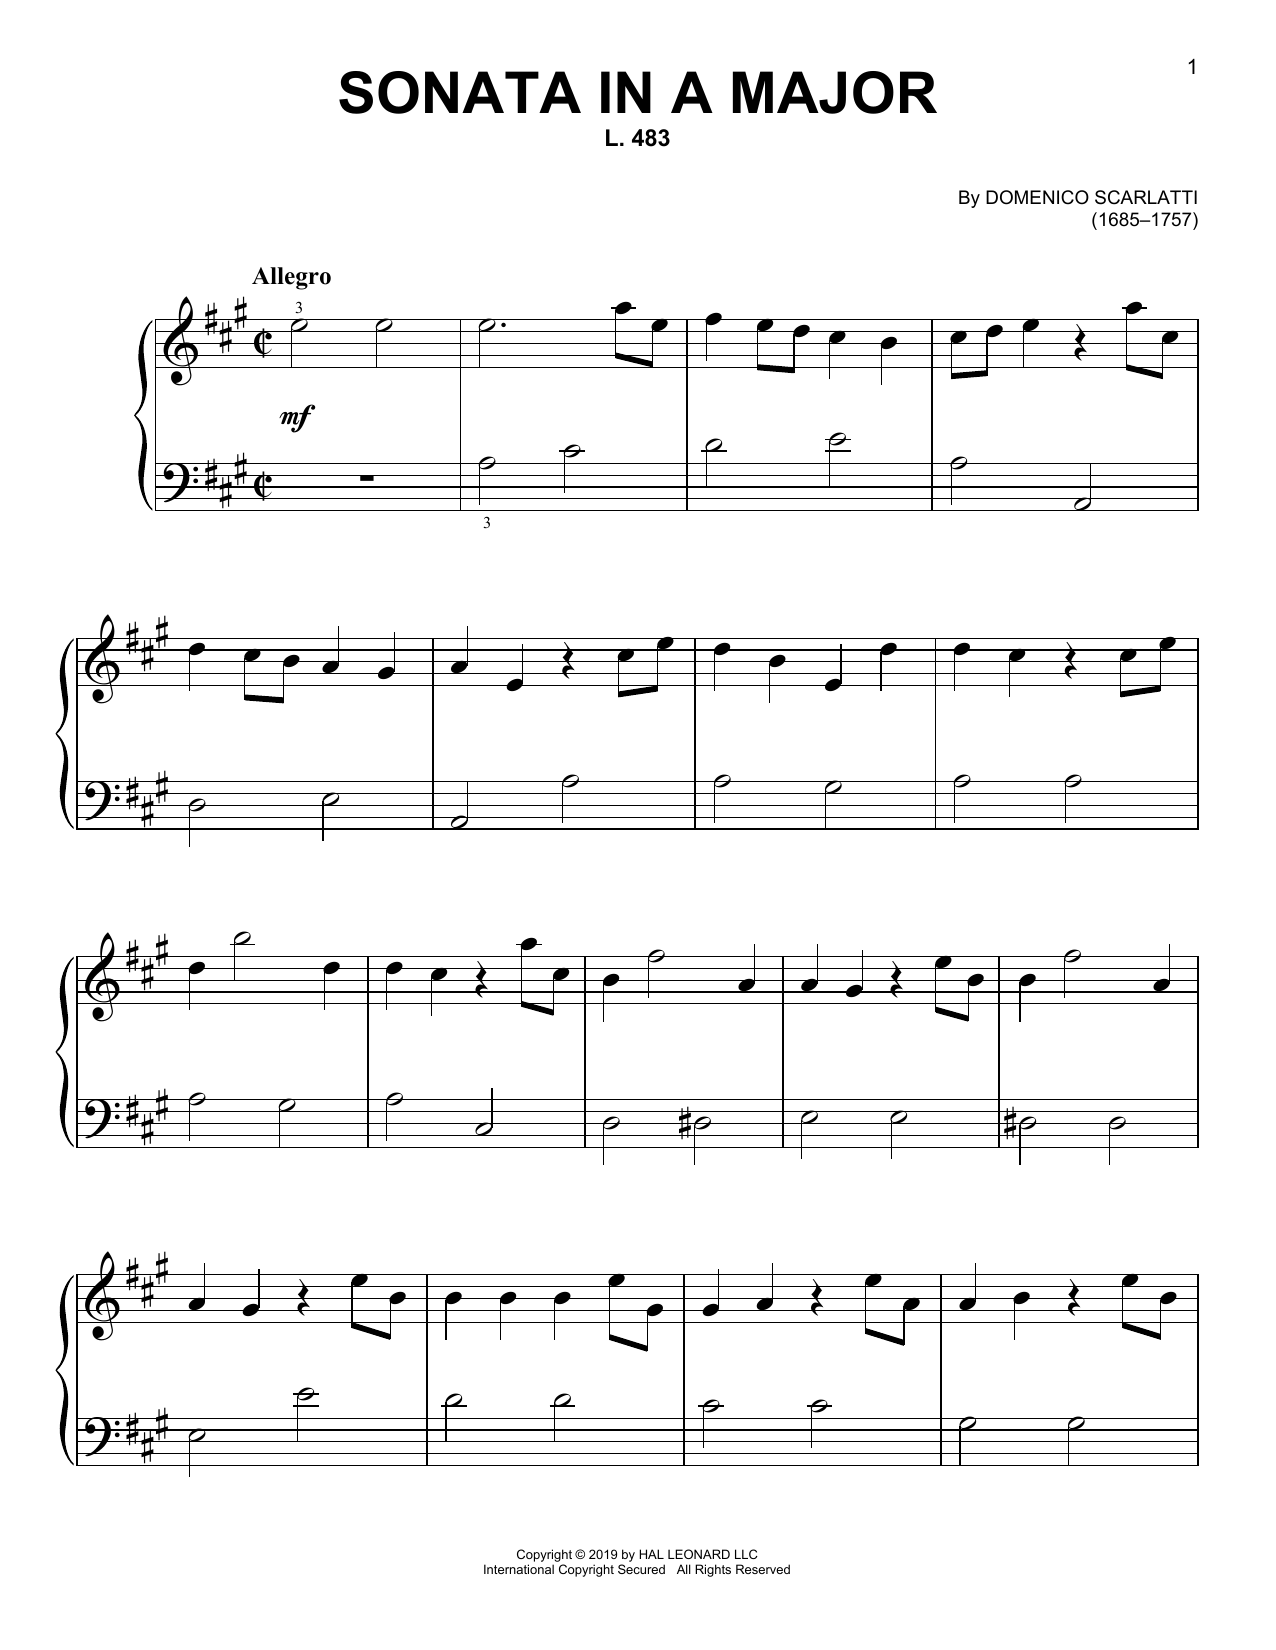 Domenico Scarlatti Sonata In A Major, L. 483 Sheet Music Notes & Chords for Easy Piano - Download or Print PDF